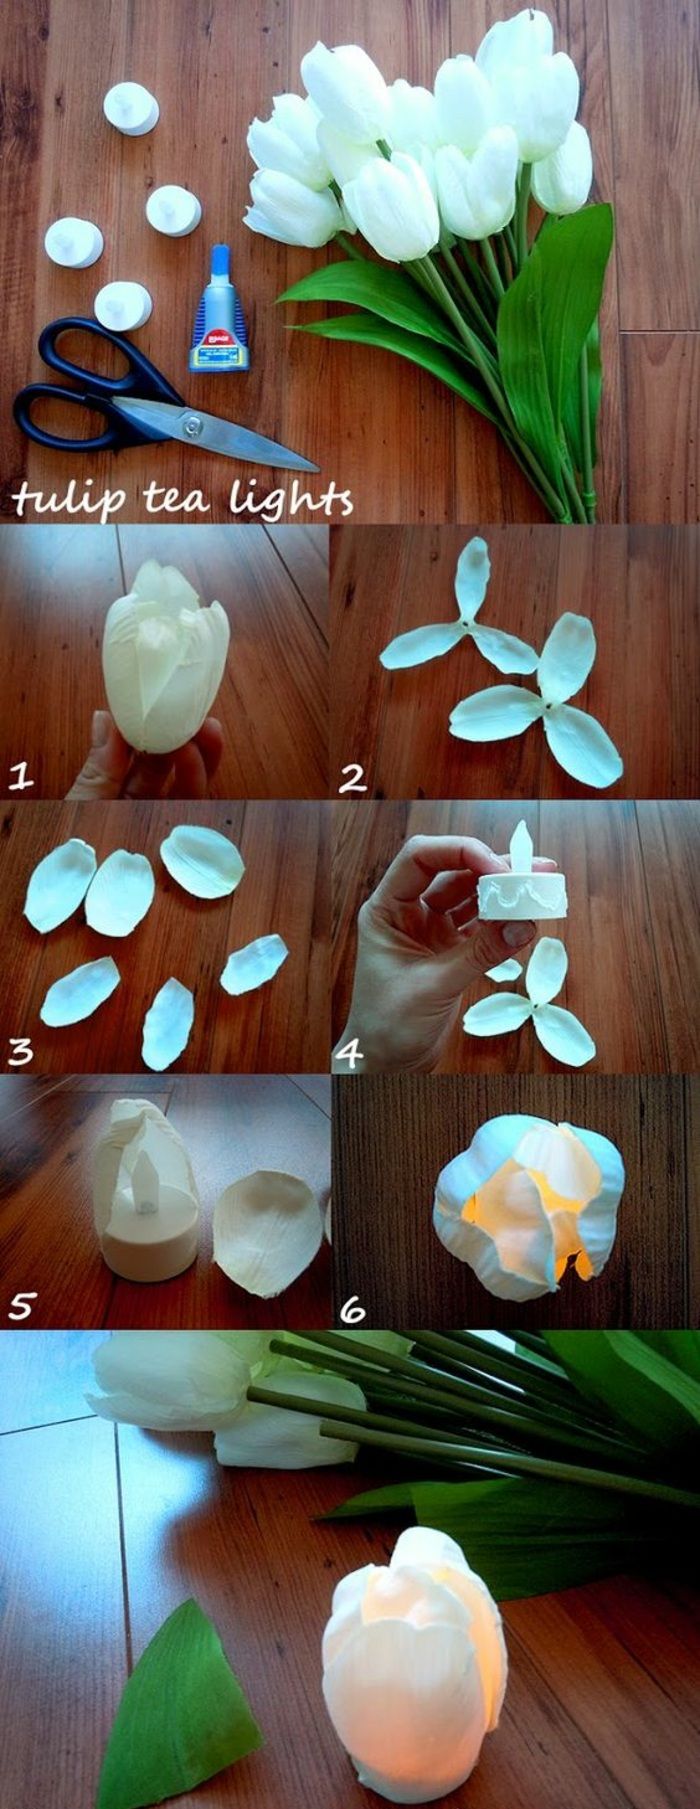 tealights feitos de colheres plásticas e pétalas brancas, tulipas